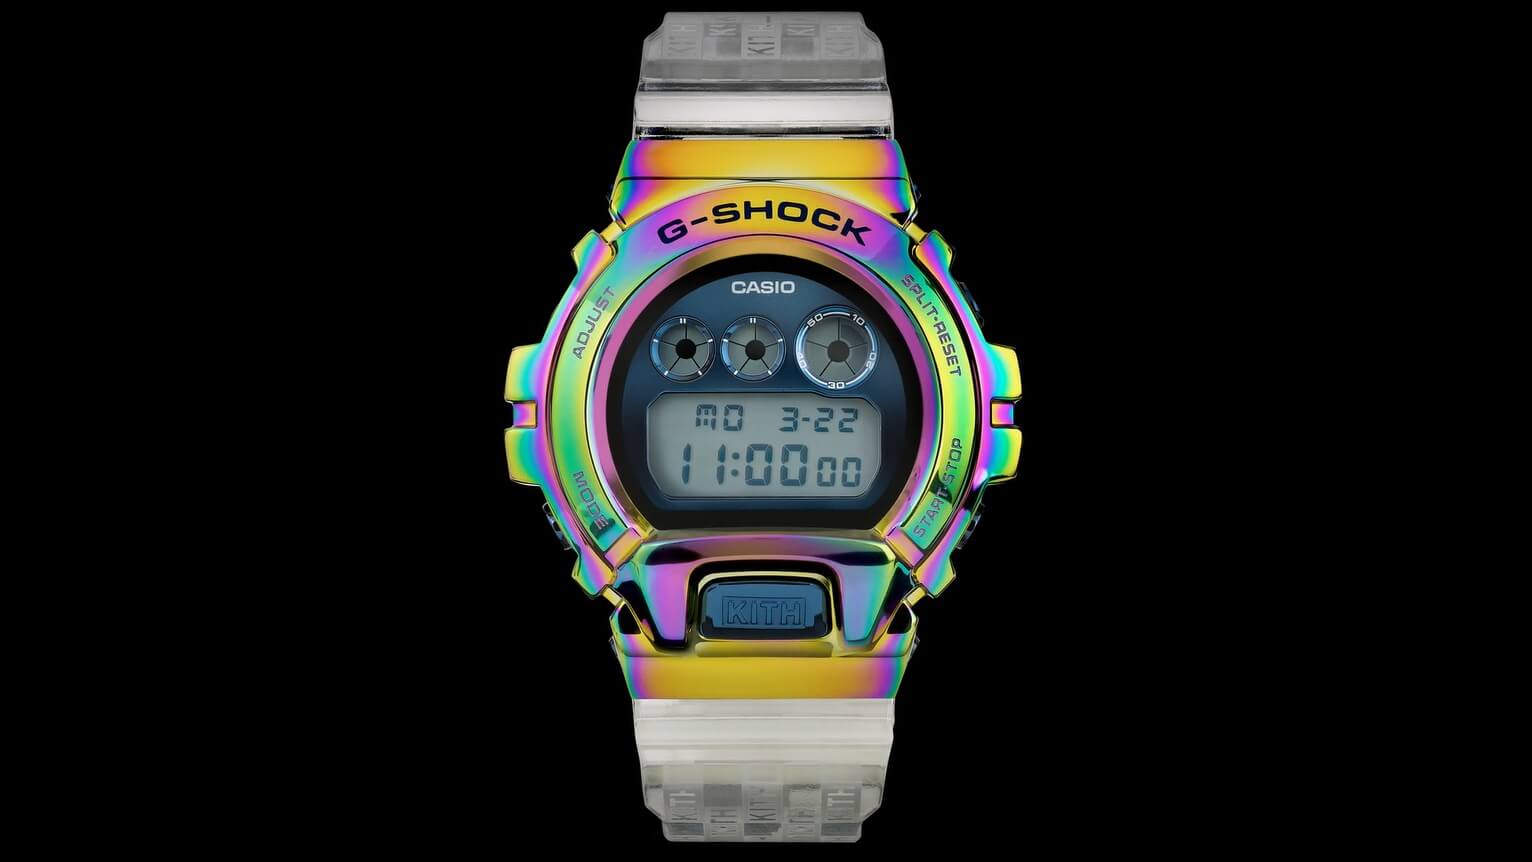 KITH x G-Shock GM-6900 Rainbow for 2021 10th Anniversary - G 